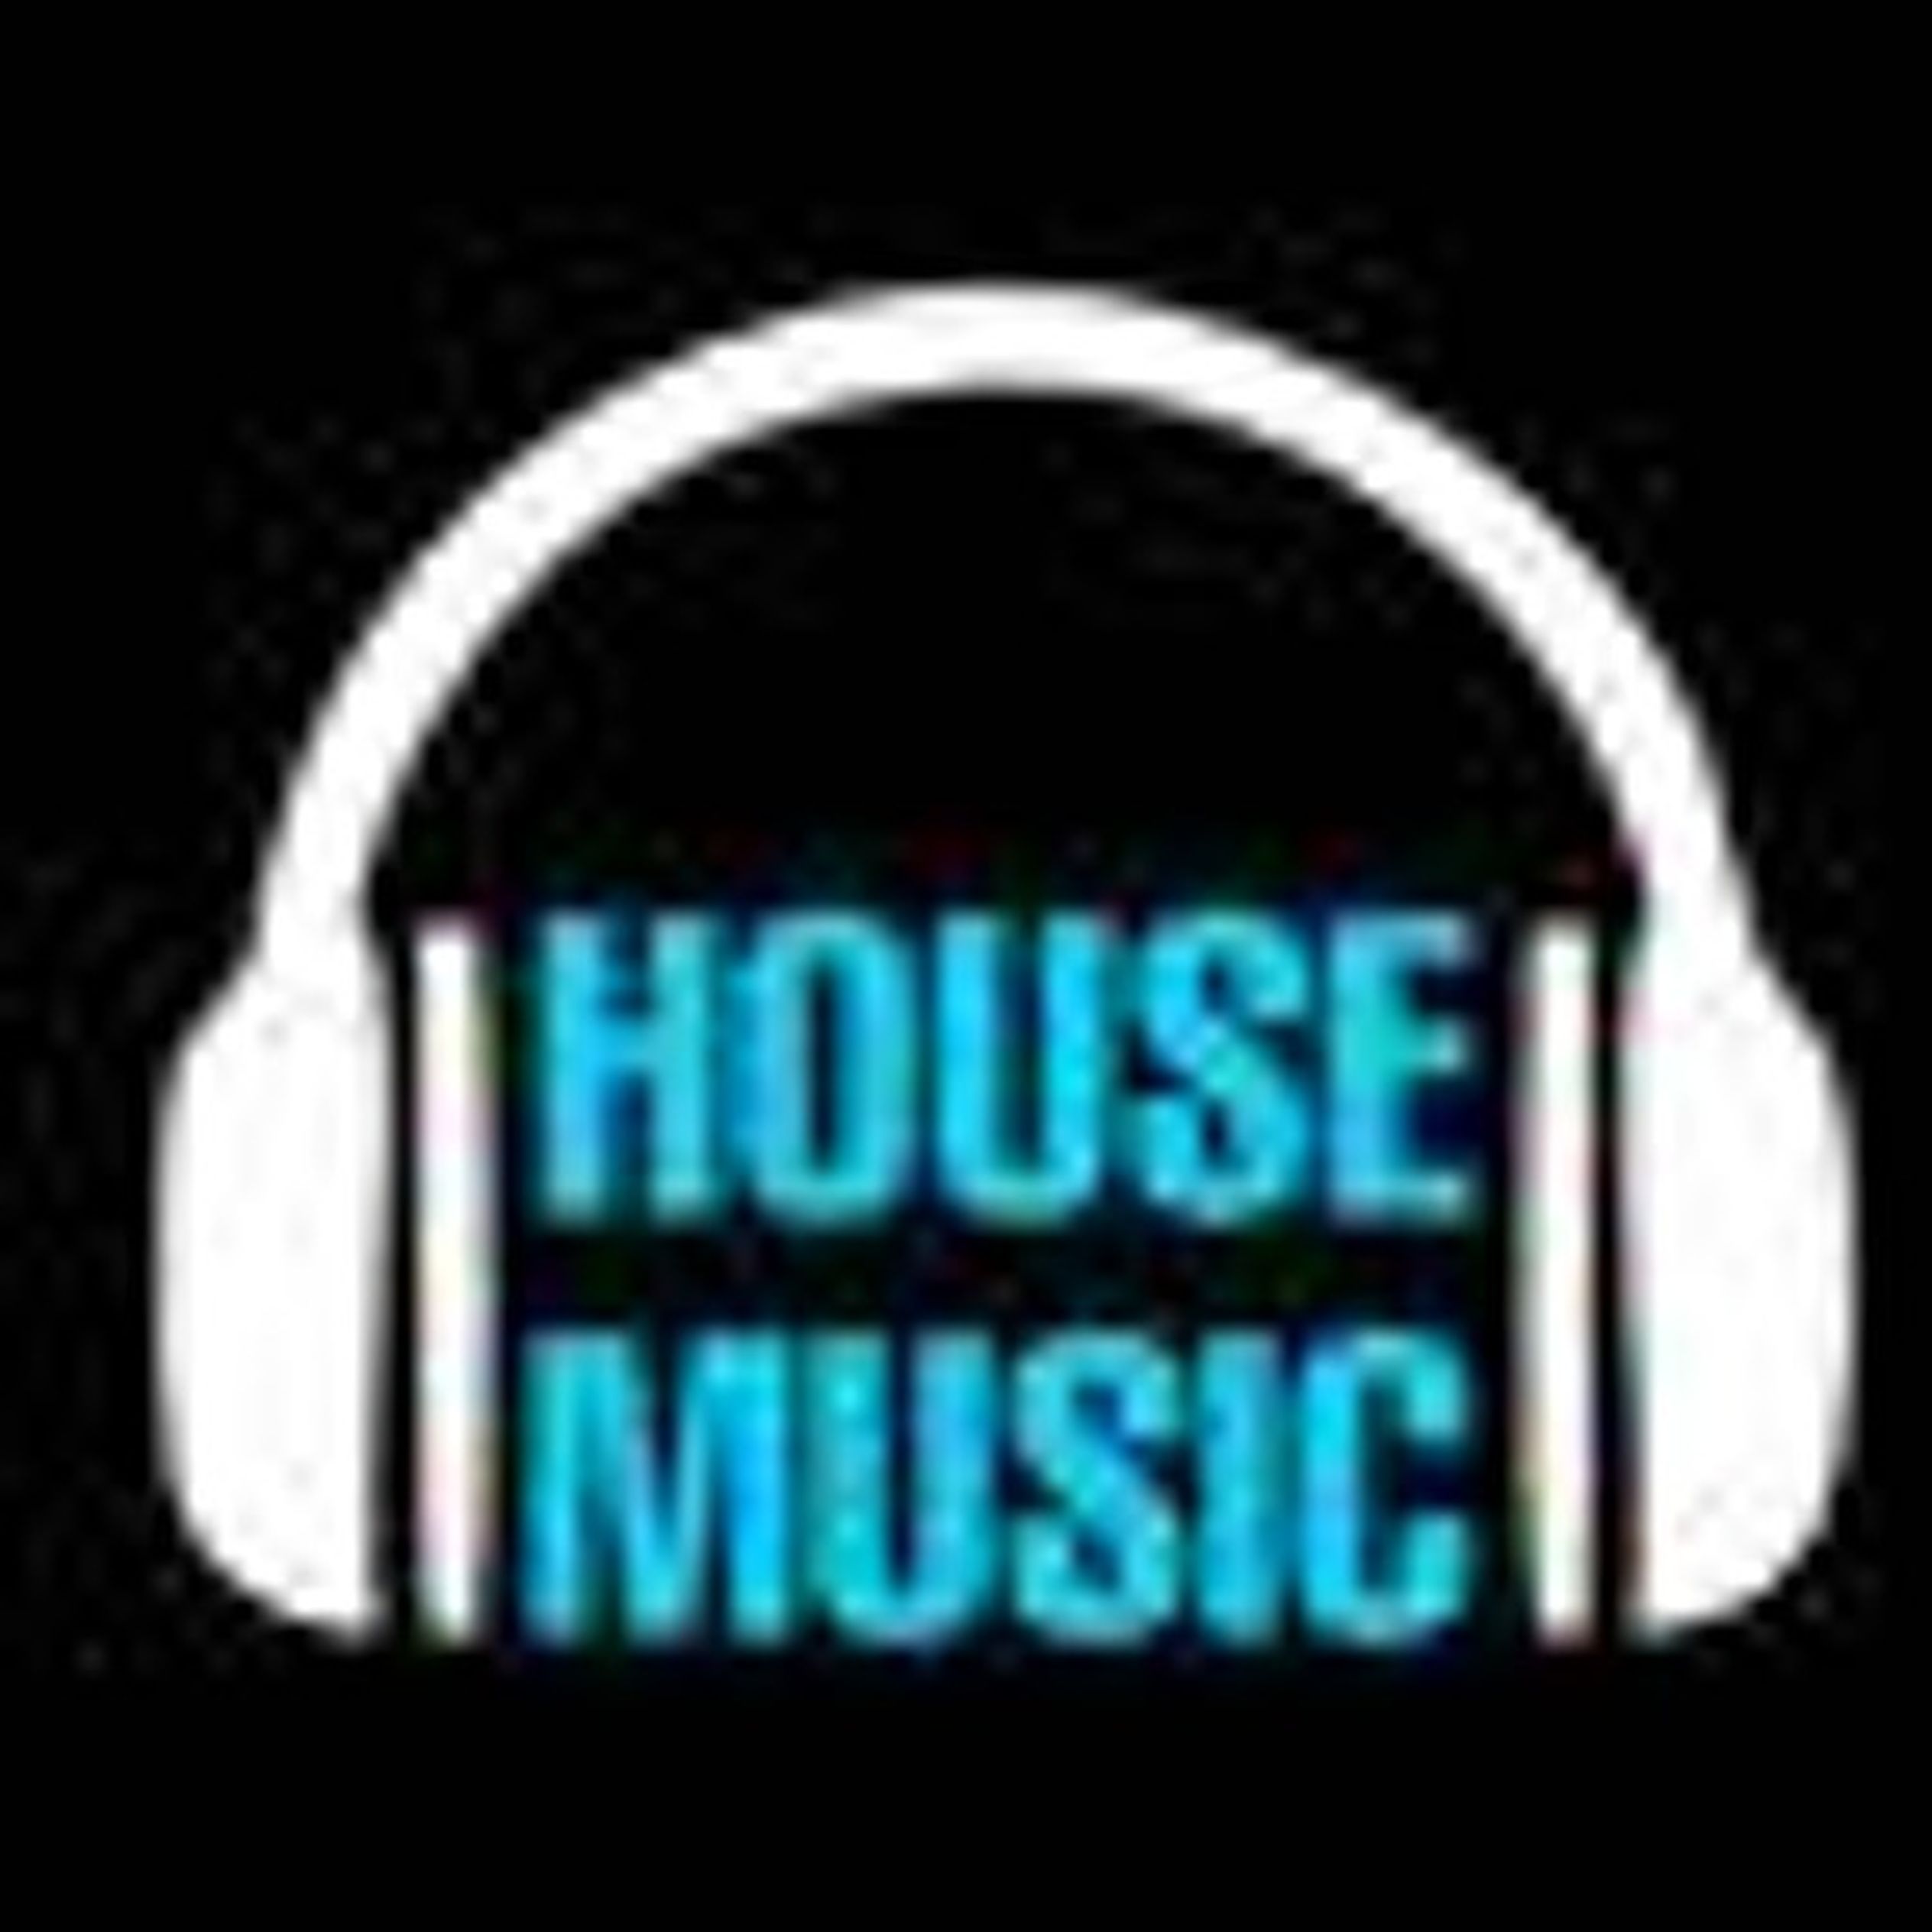 House music 7. House Music. Надпись Хаус. House Music фото. House Music обложка.